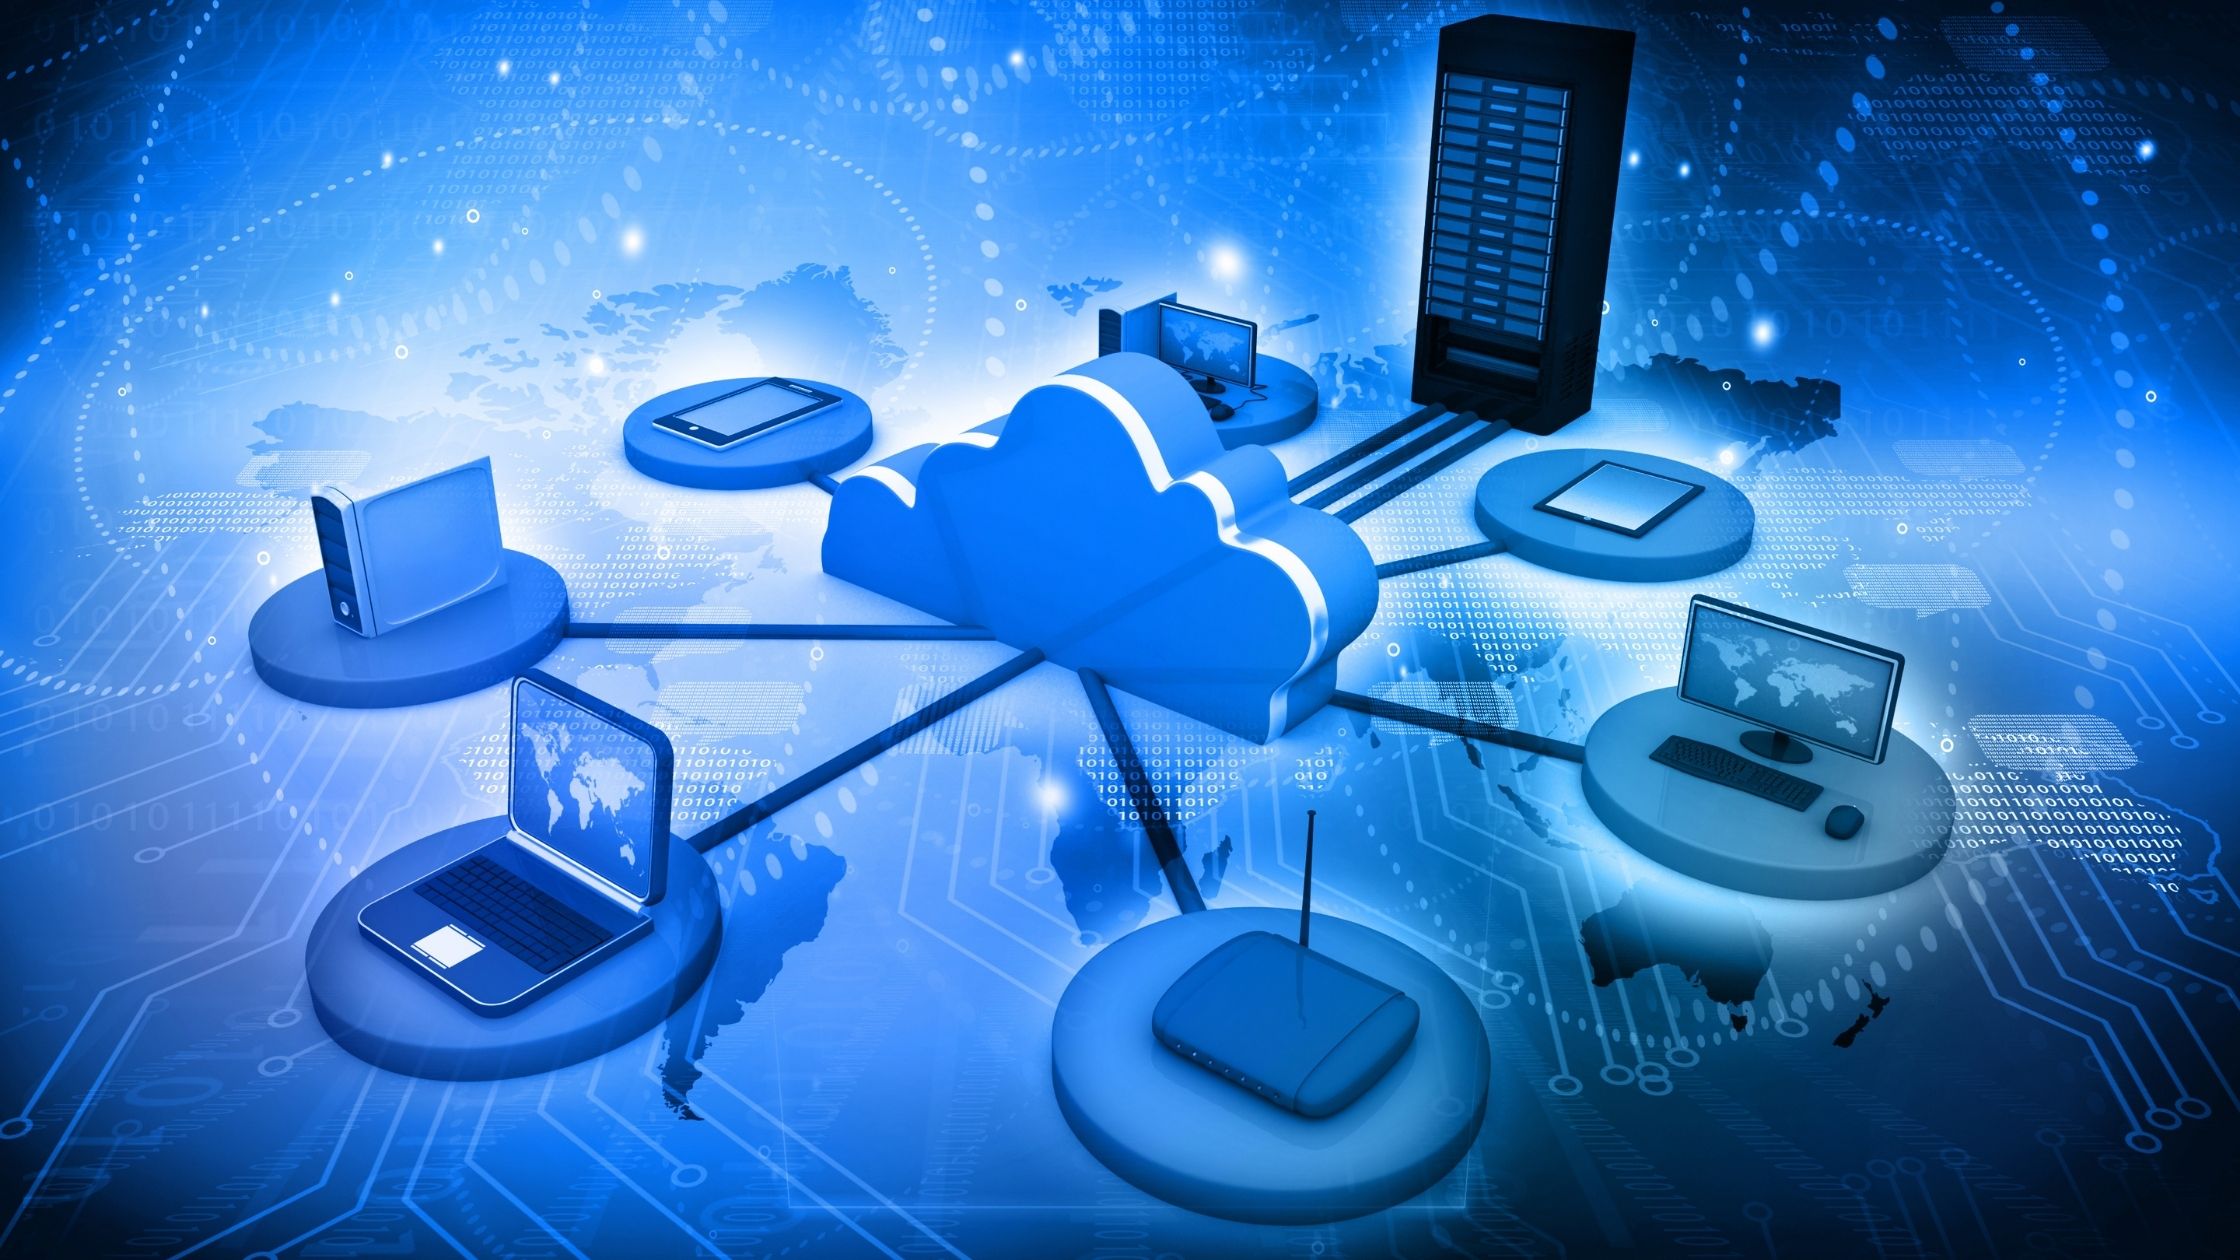 cloud computing ppt presentation free download